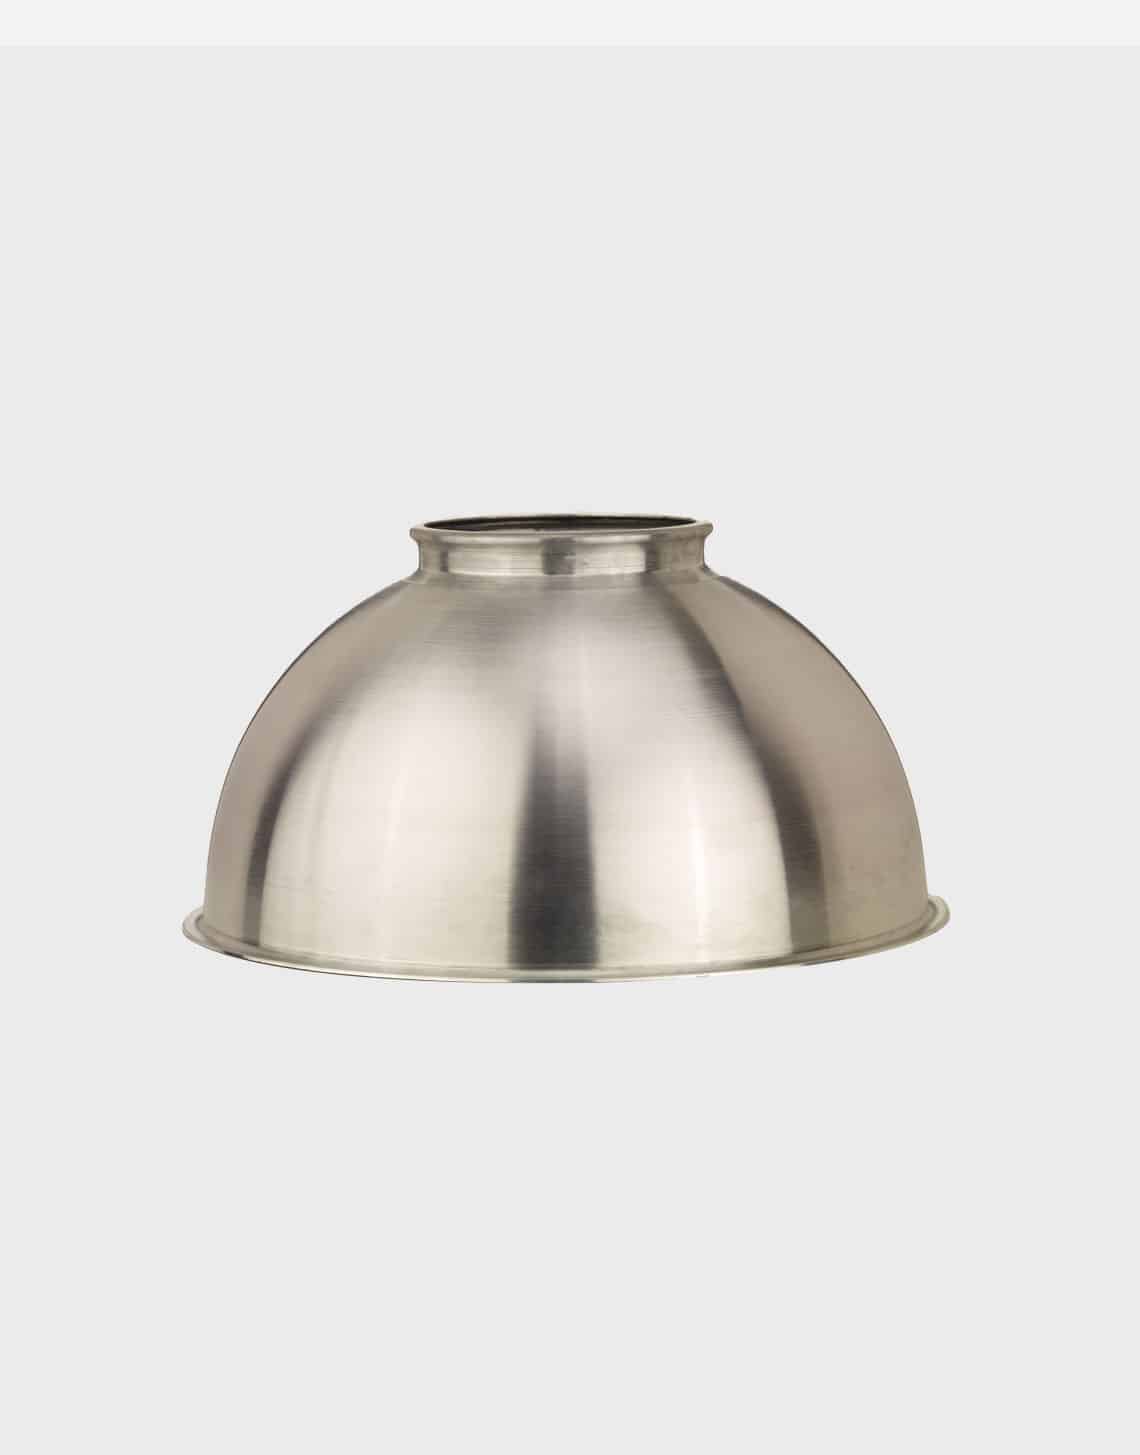 Spun Aluminum Dome for gas lamps